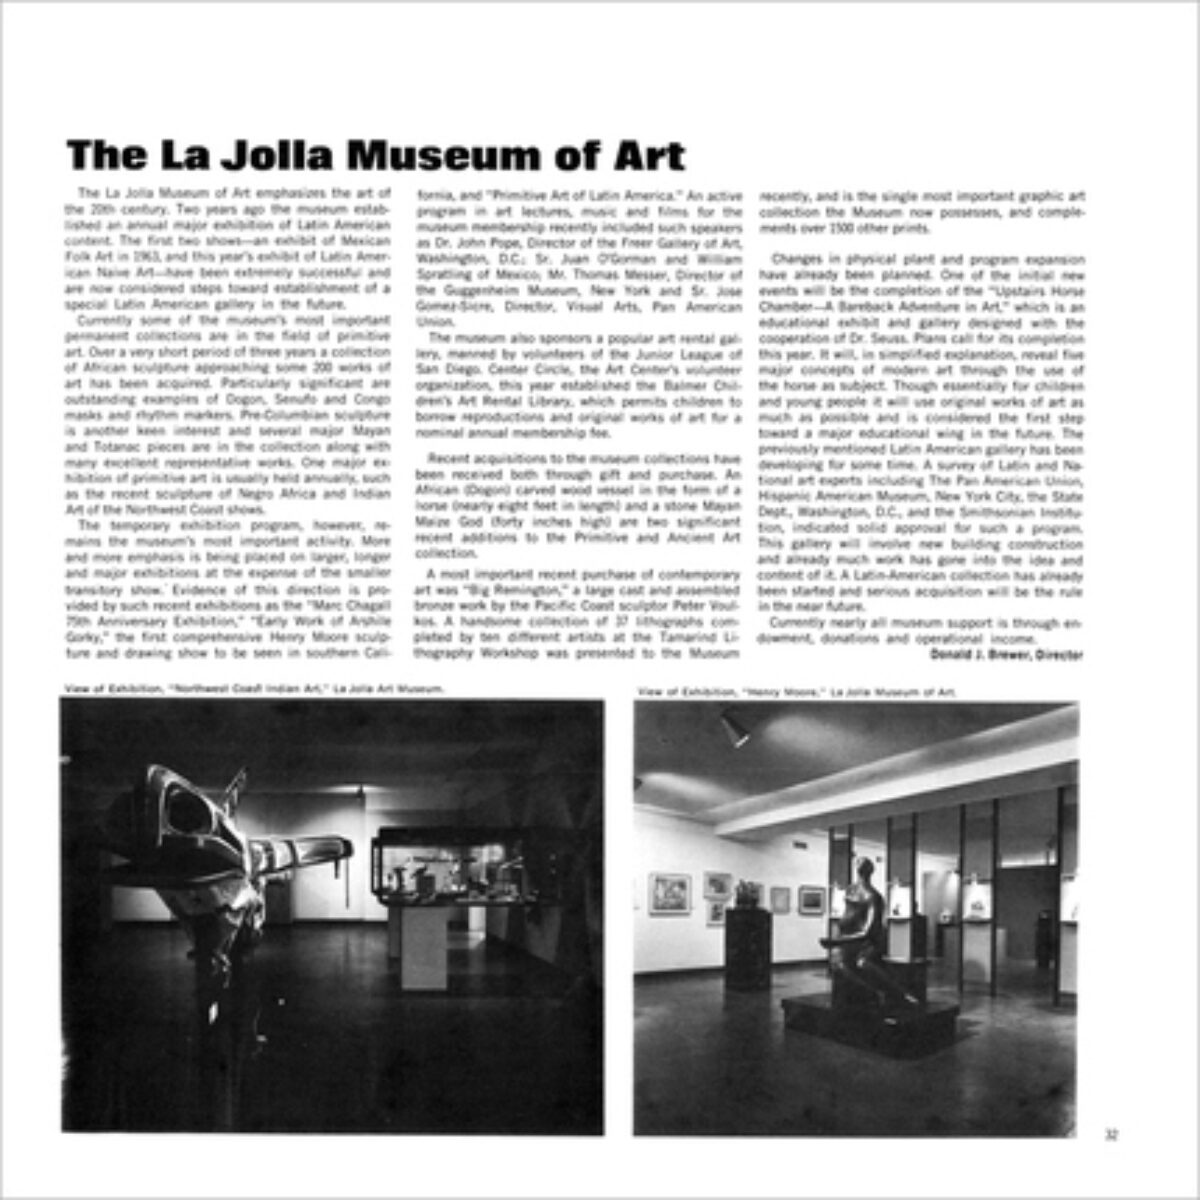 Article featuring La Jolla Museum of Art in 1964